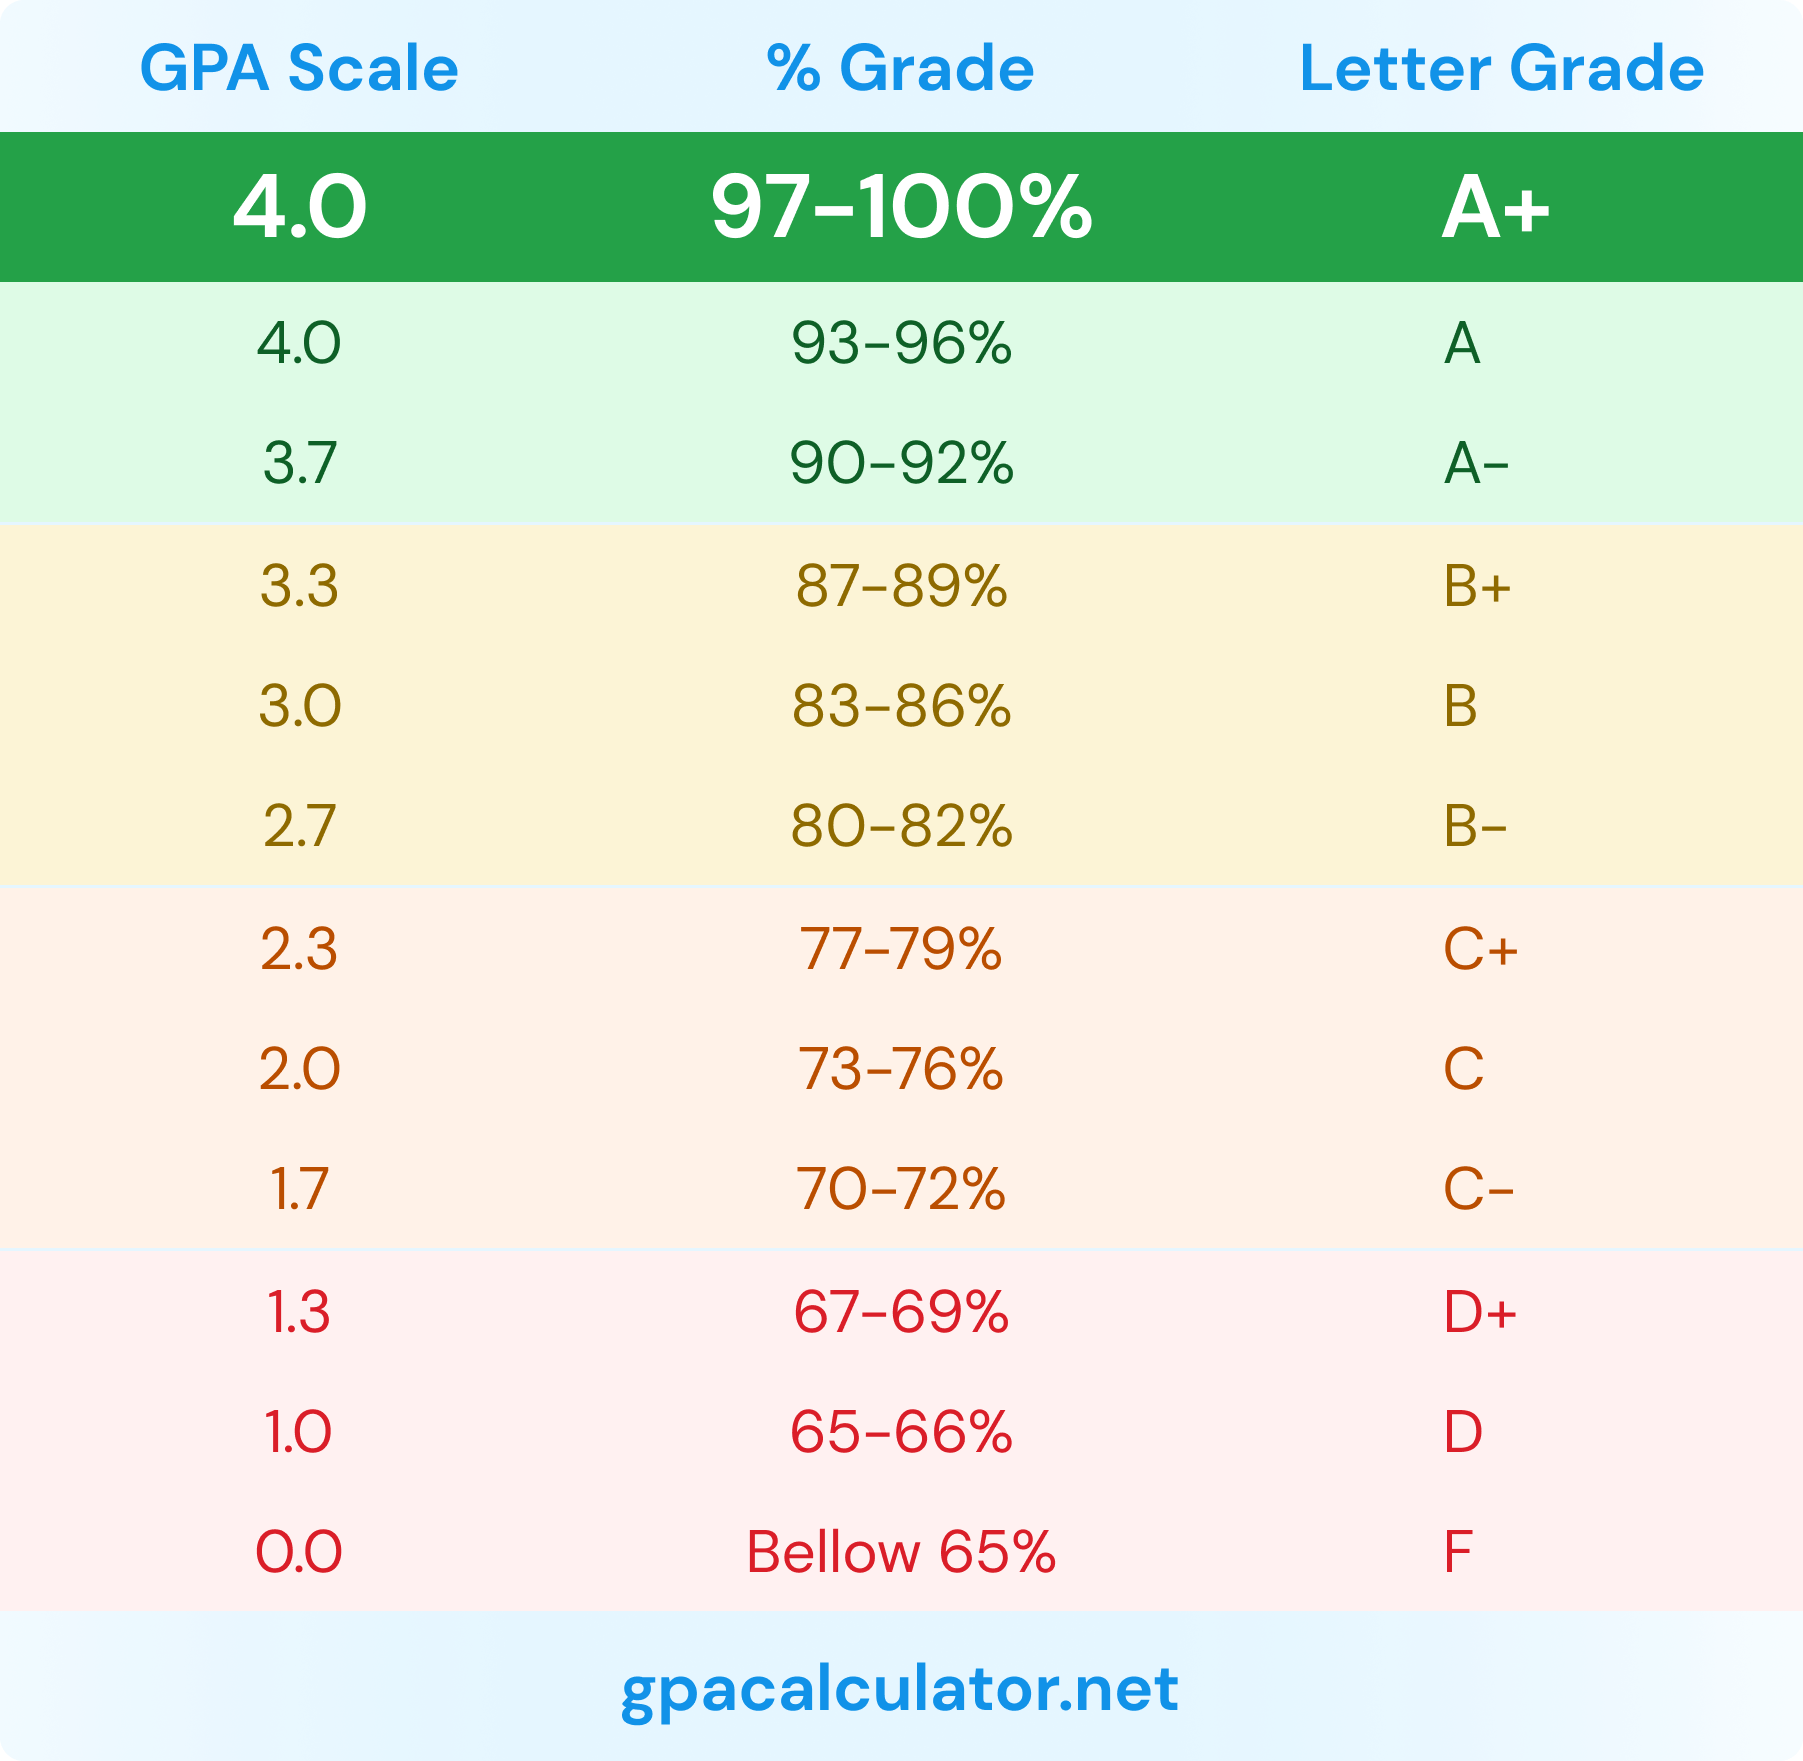 Is a 96 a good grade?